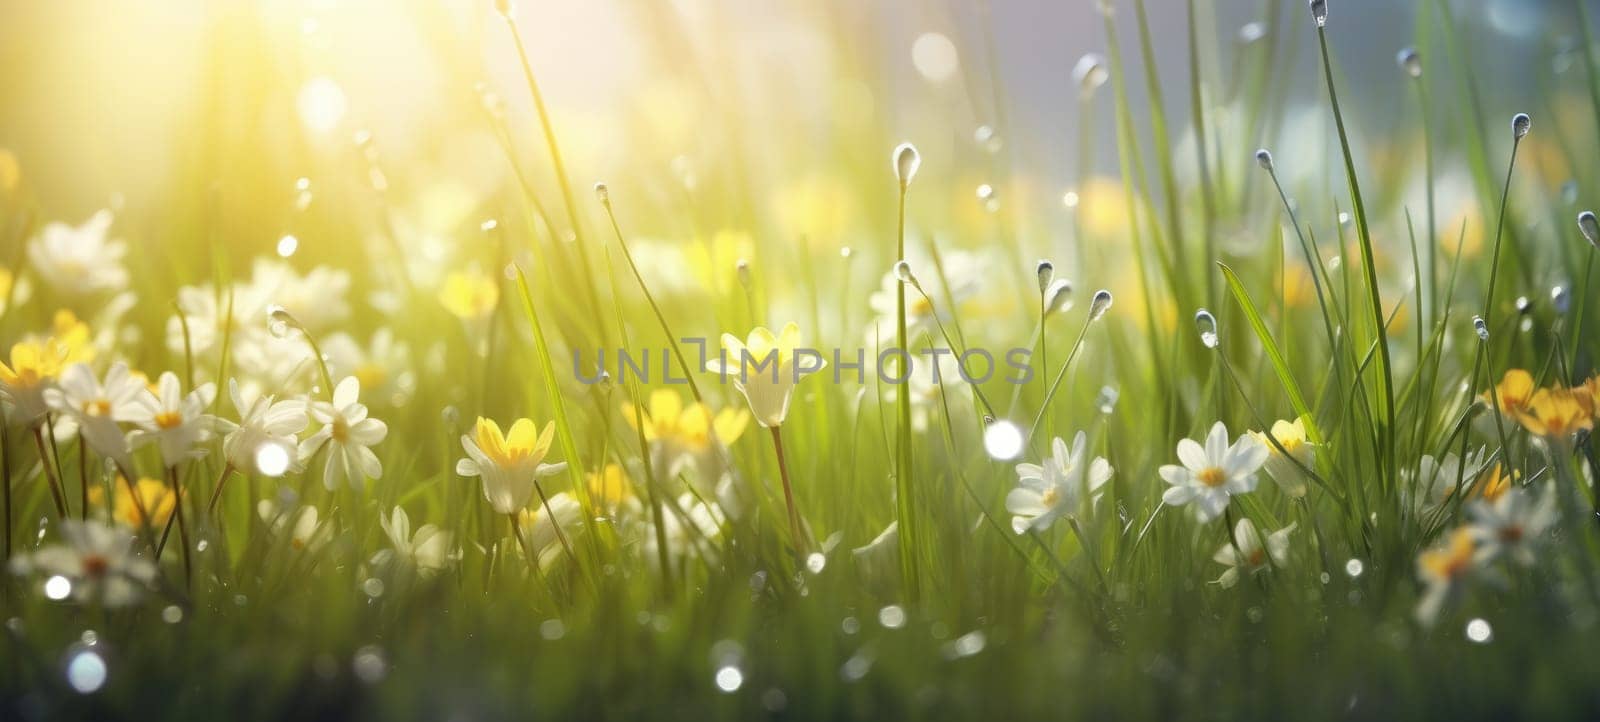 grass sunlight spring summer with dew, ai by rachellaiyl